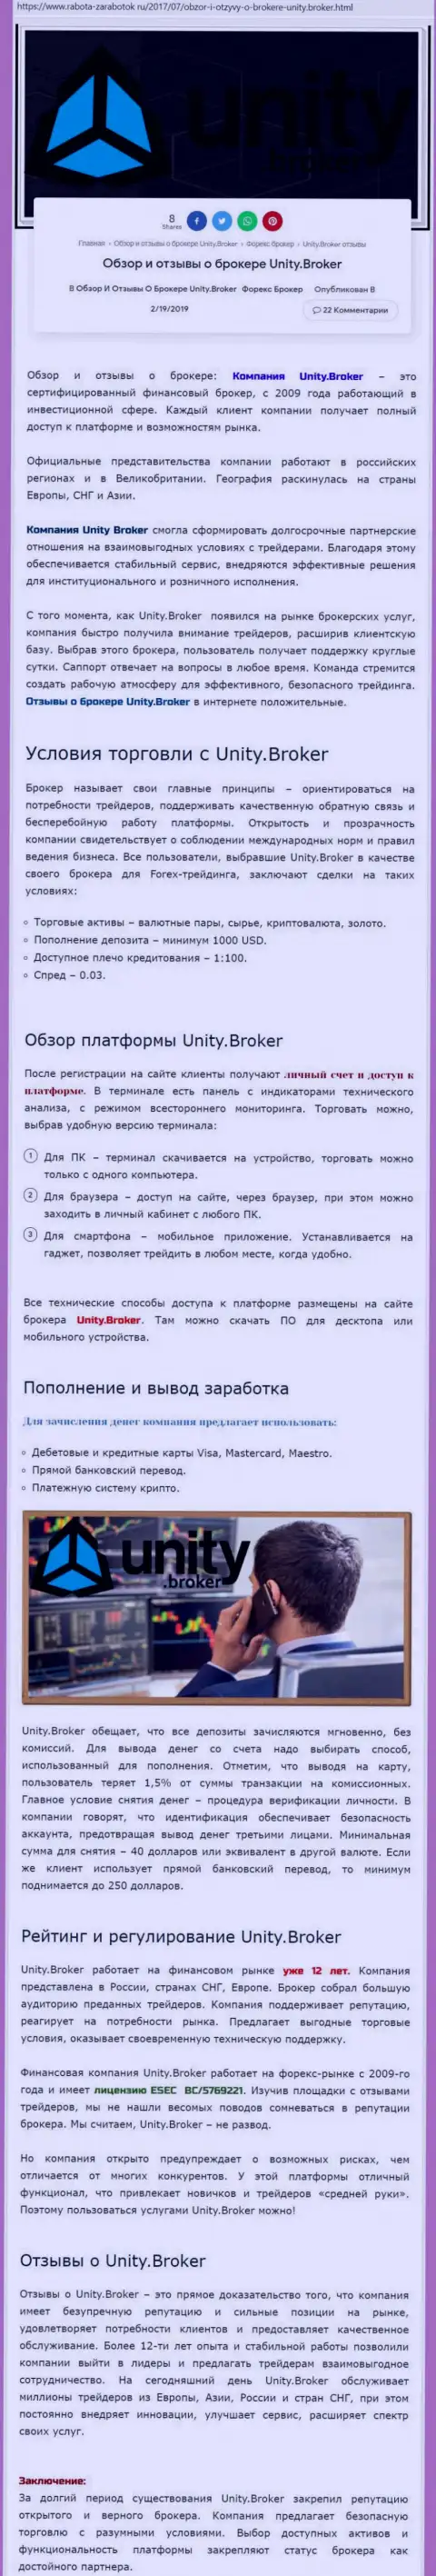 Обзорная инфа форекс брокера Unity Broker на интернет-сервисе rabota zarabotok ru